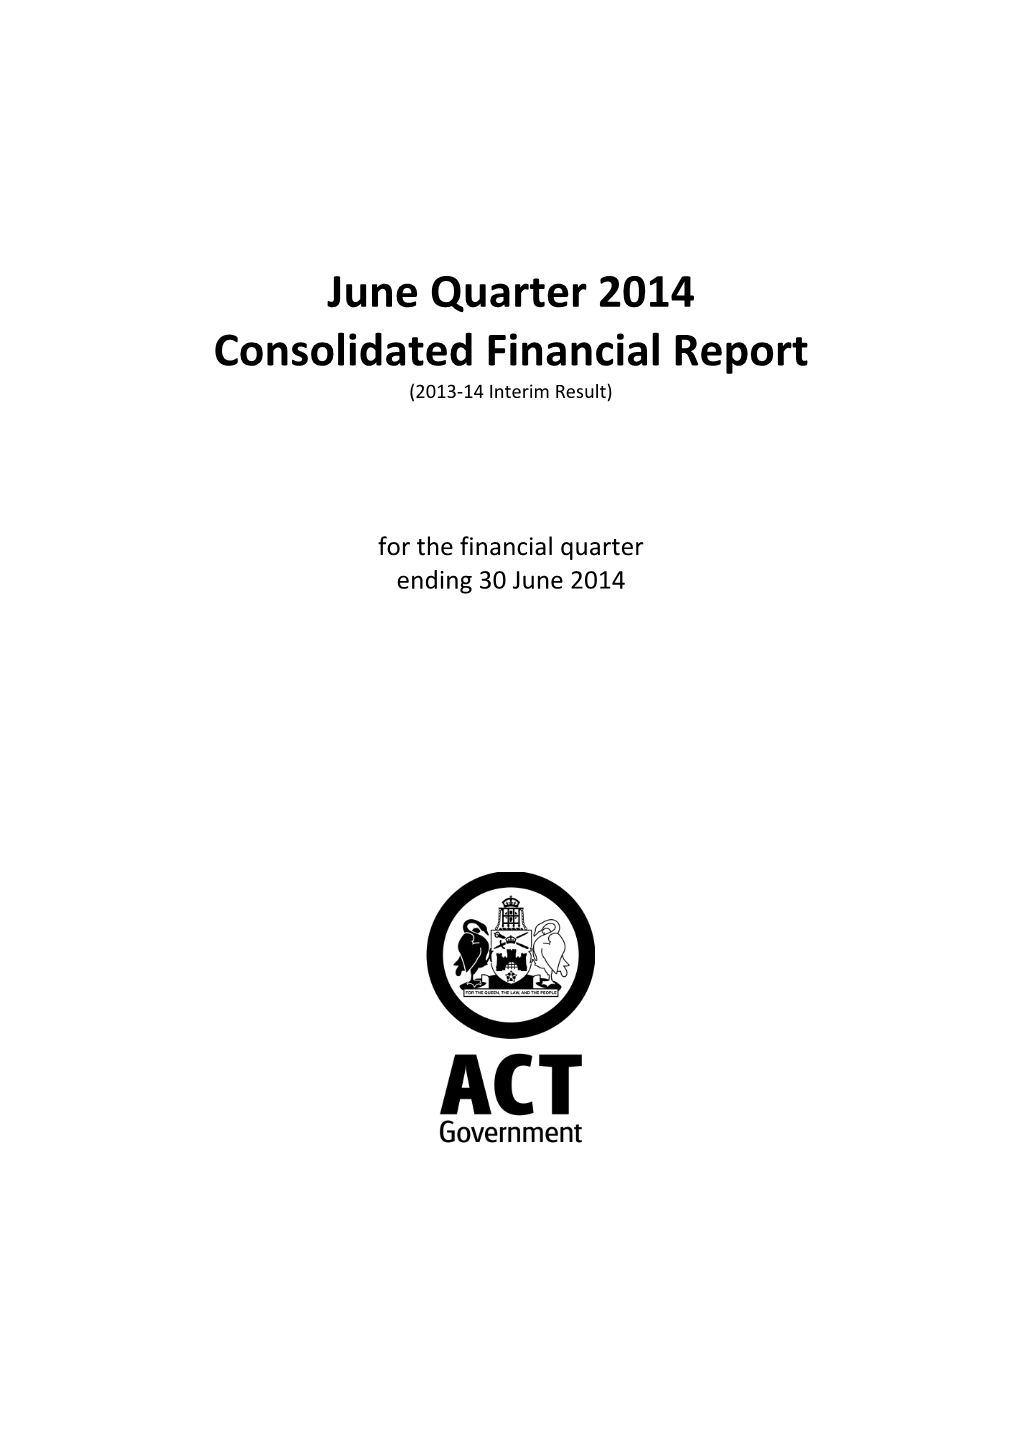 June Quarter 2014 Consolidated Financial Report